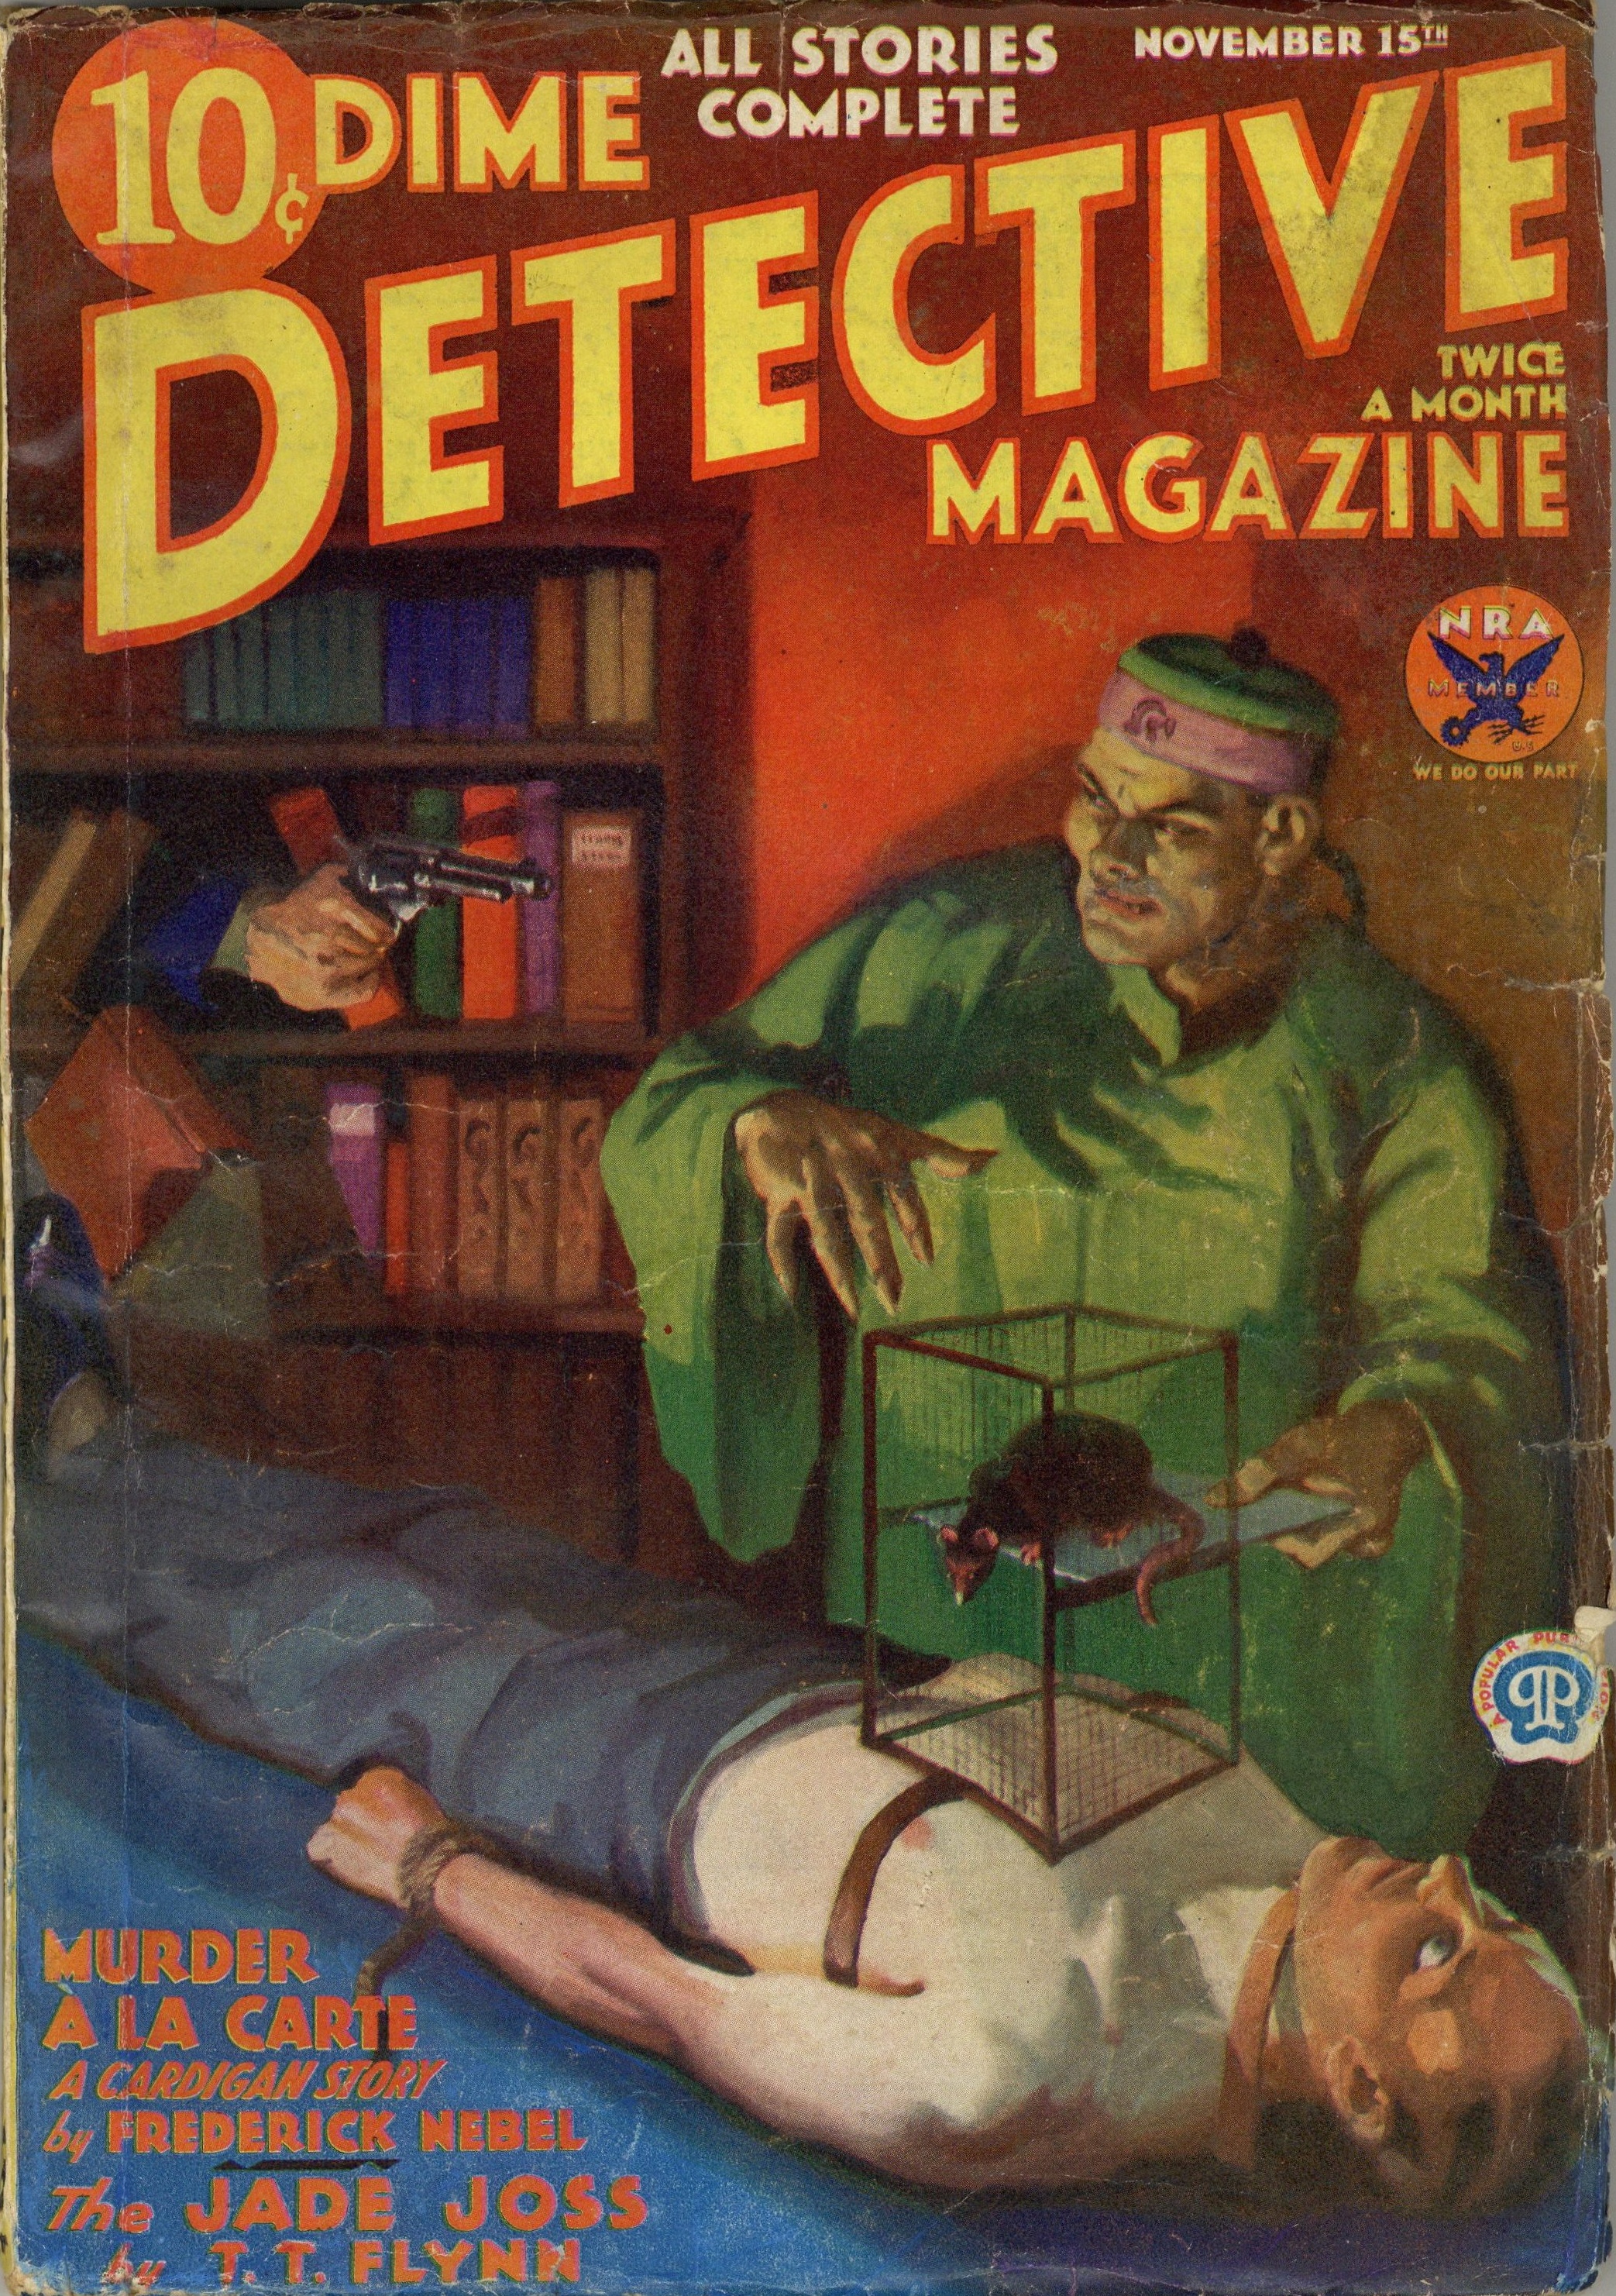 Dime Detective Magazine Nov 15 1933